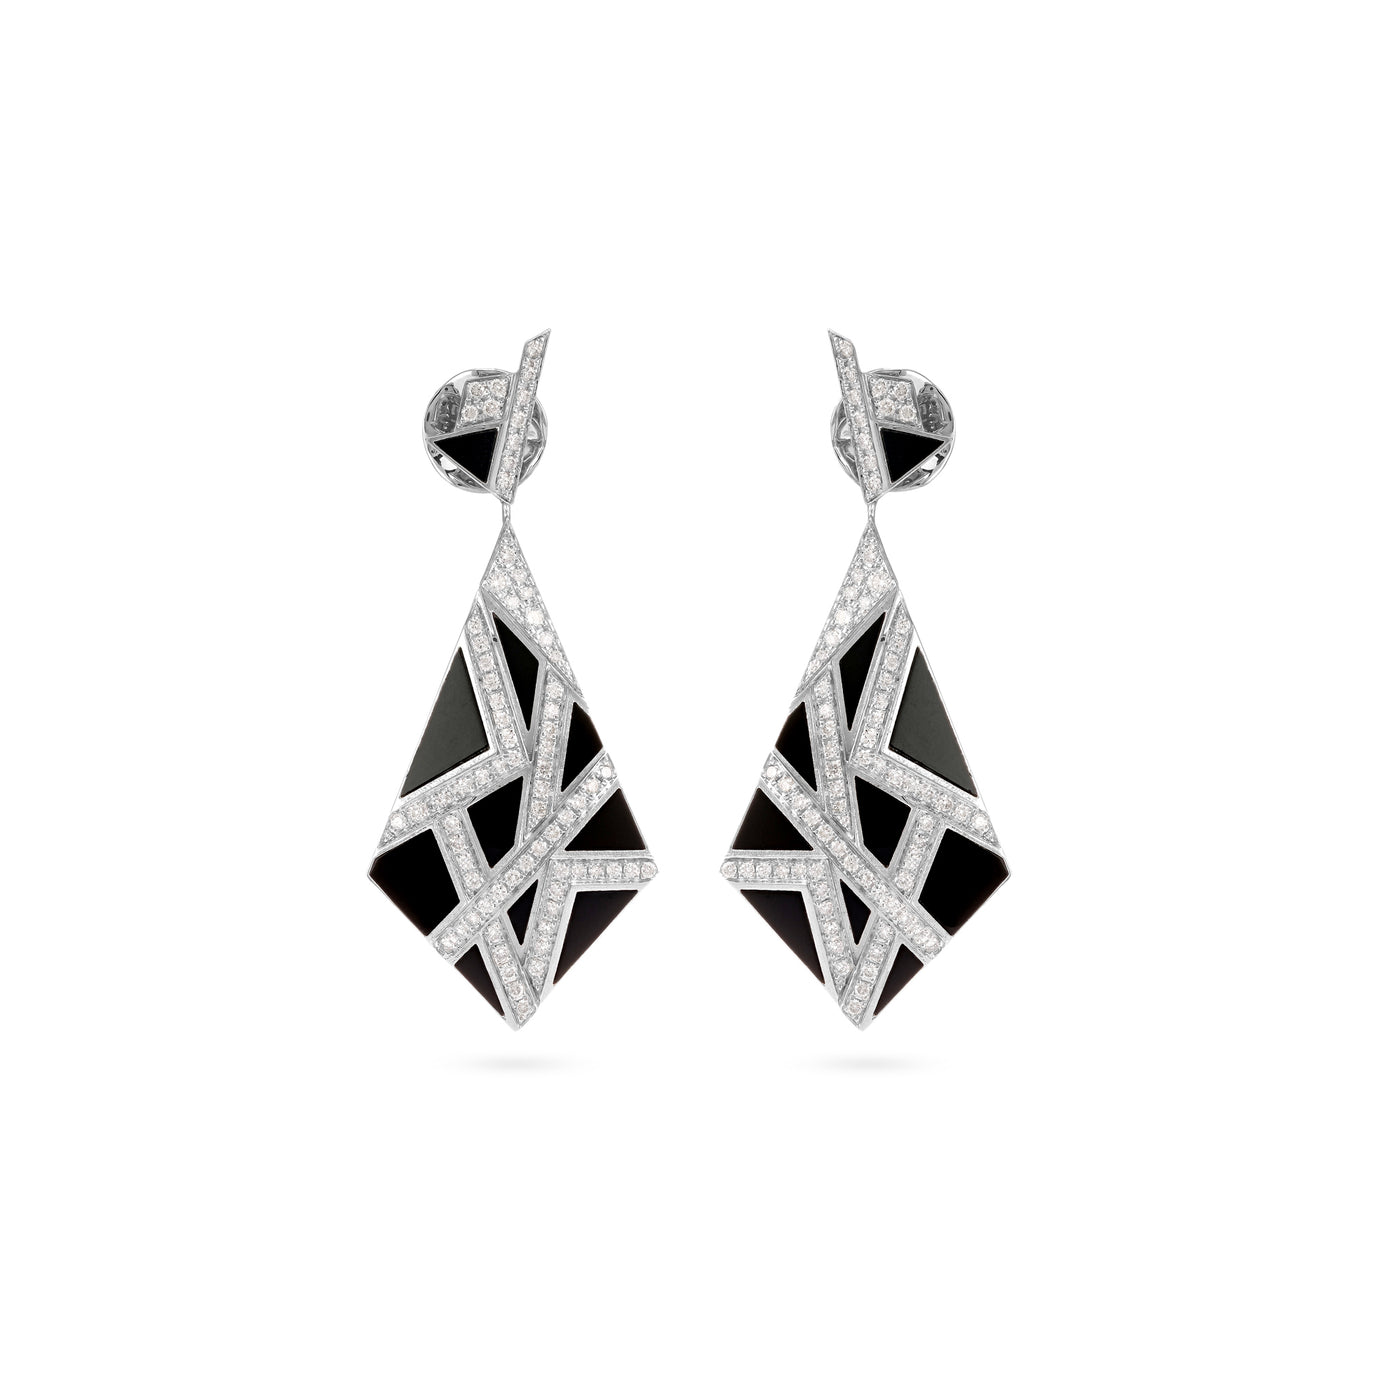 White Gold Diamond Earrings Pyramid With Black Onyx